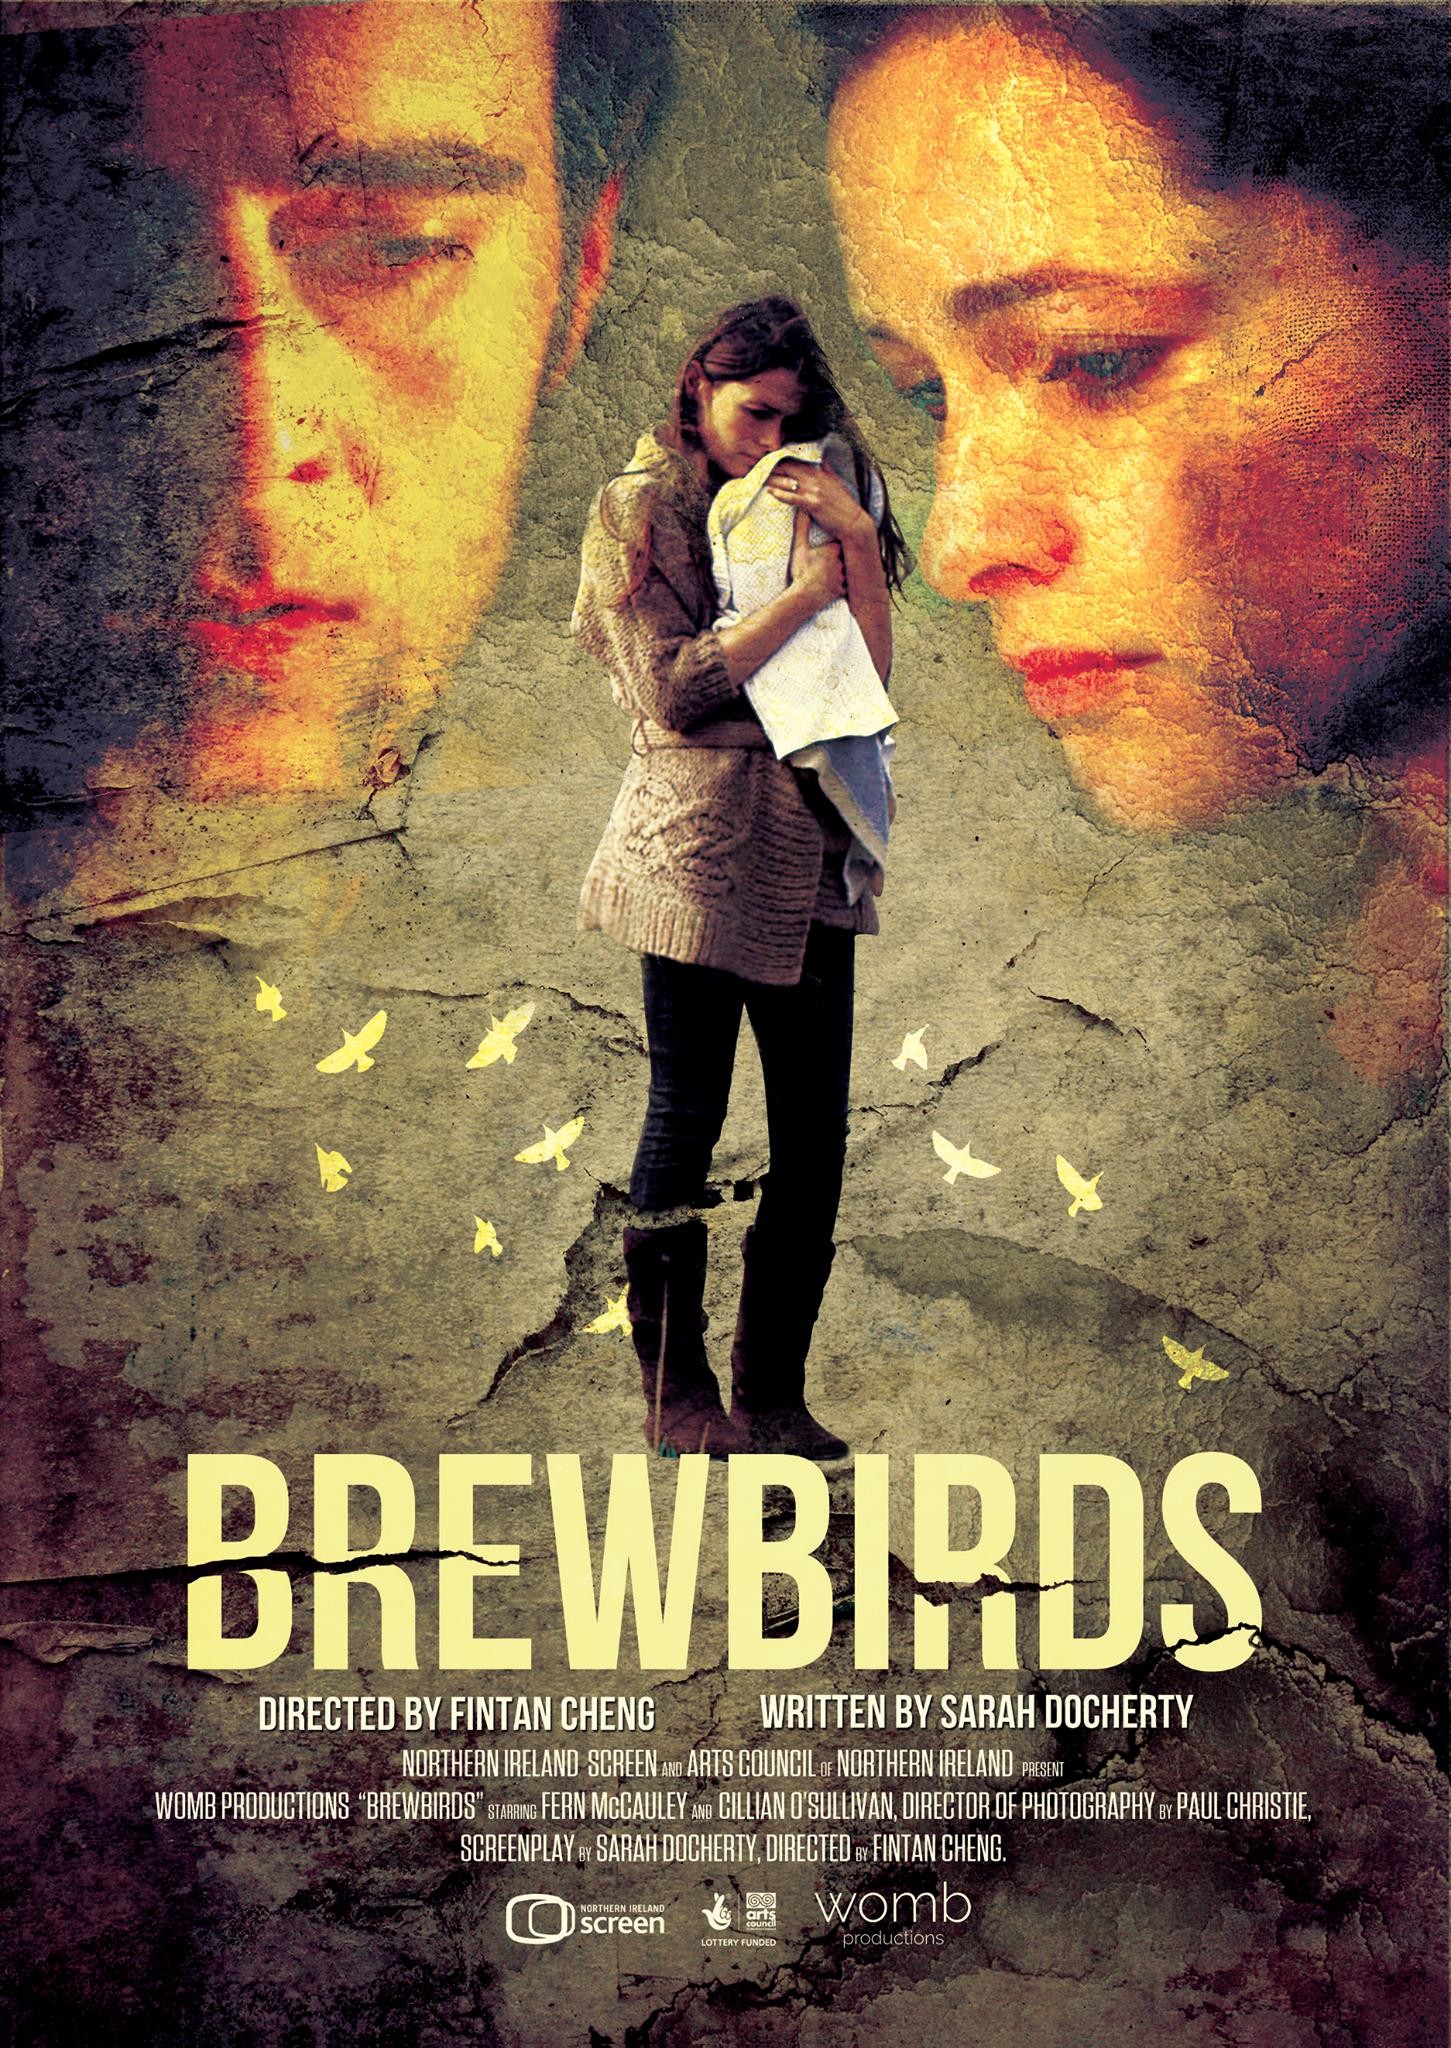 Mega Sized Movie Poster Image for Brewbirds